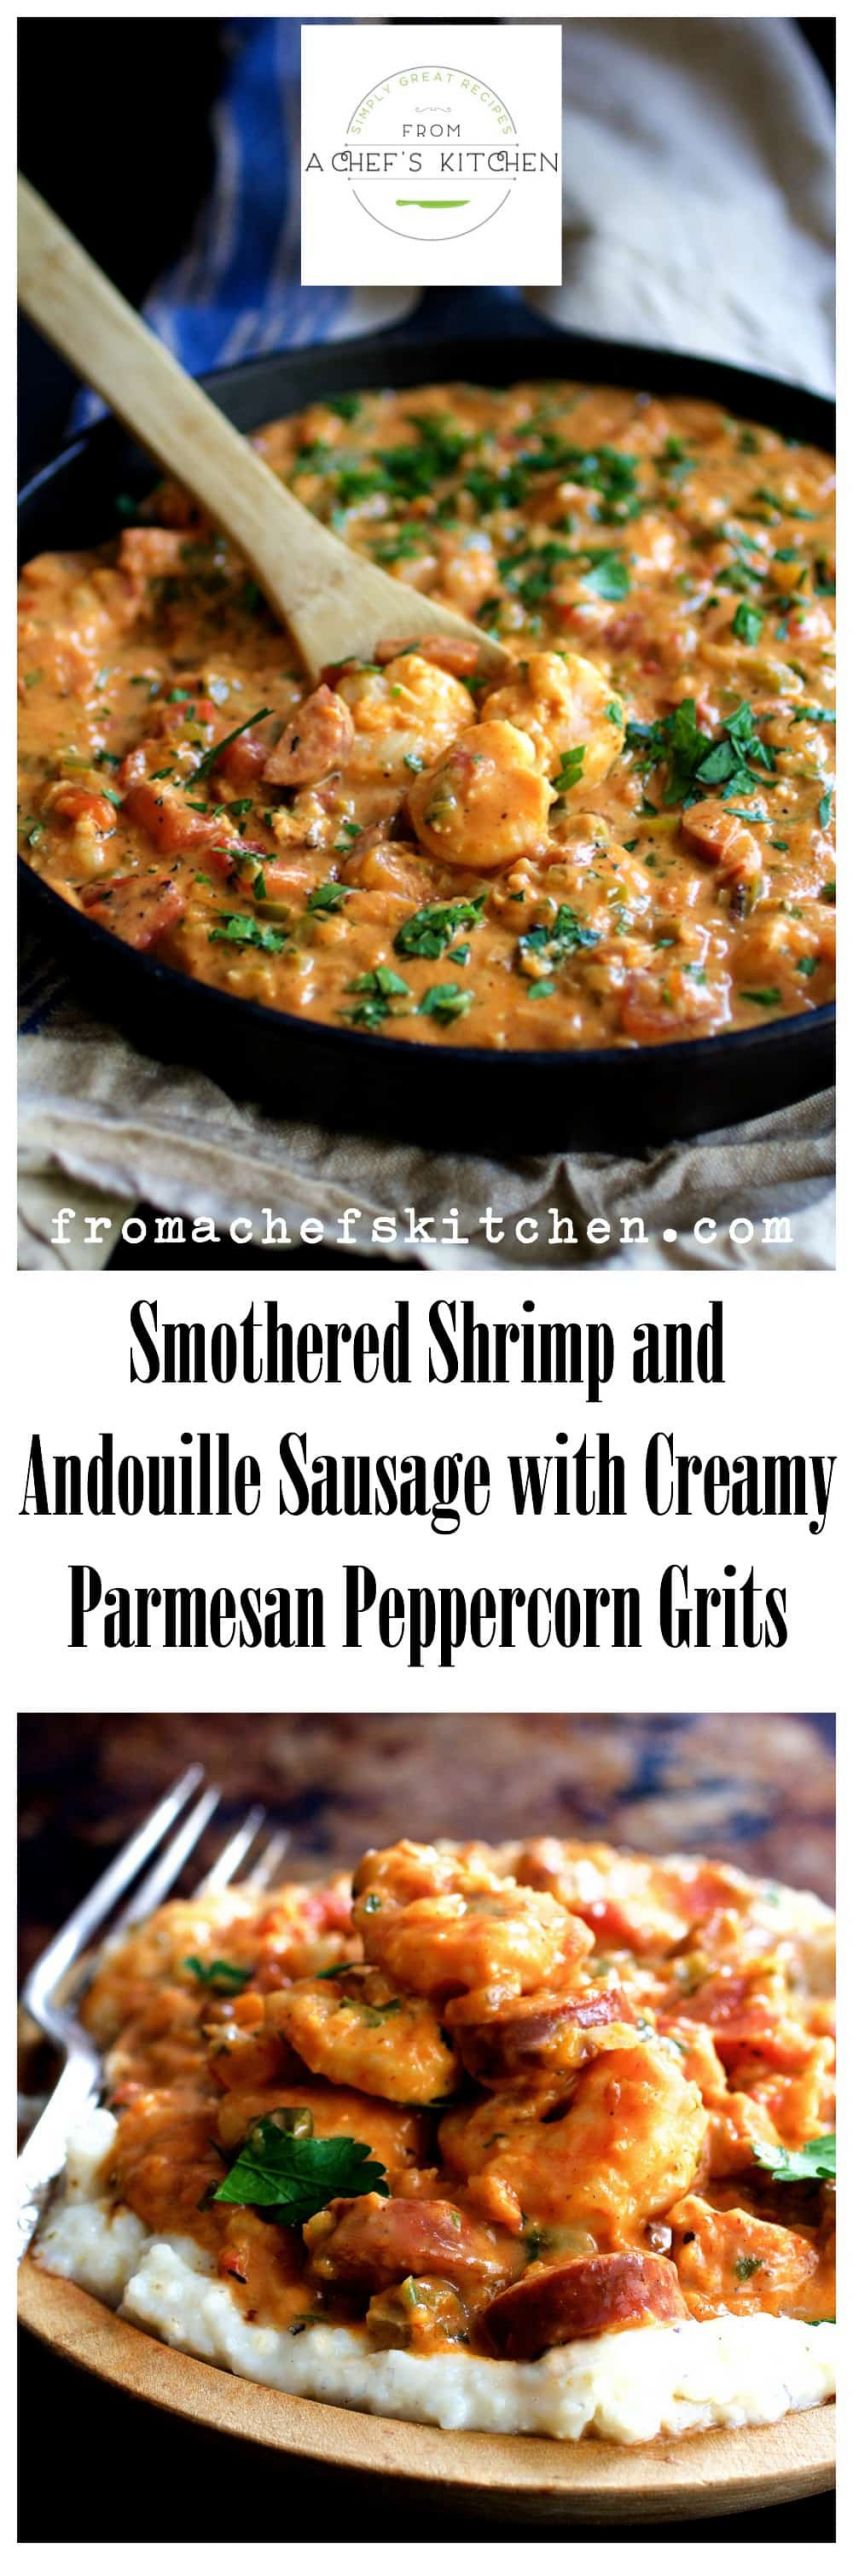 Emeril Lagasse Shrimp And Grits
 Smothered Shrimp Andouille Sausage Parmesan Peppercorn Grits